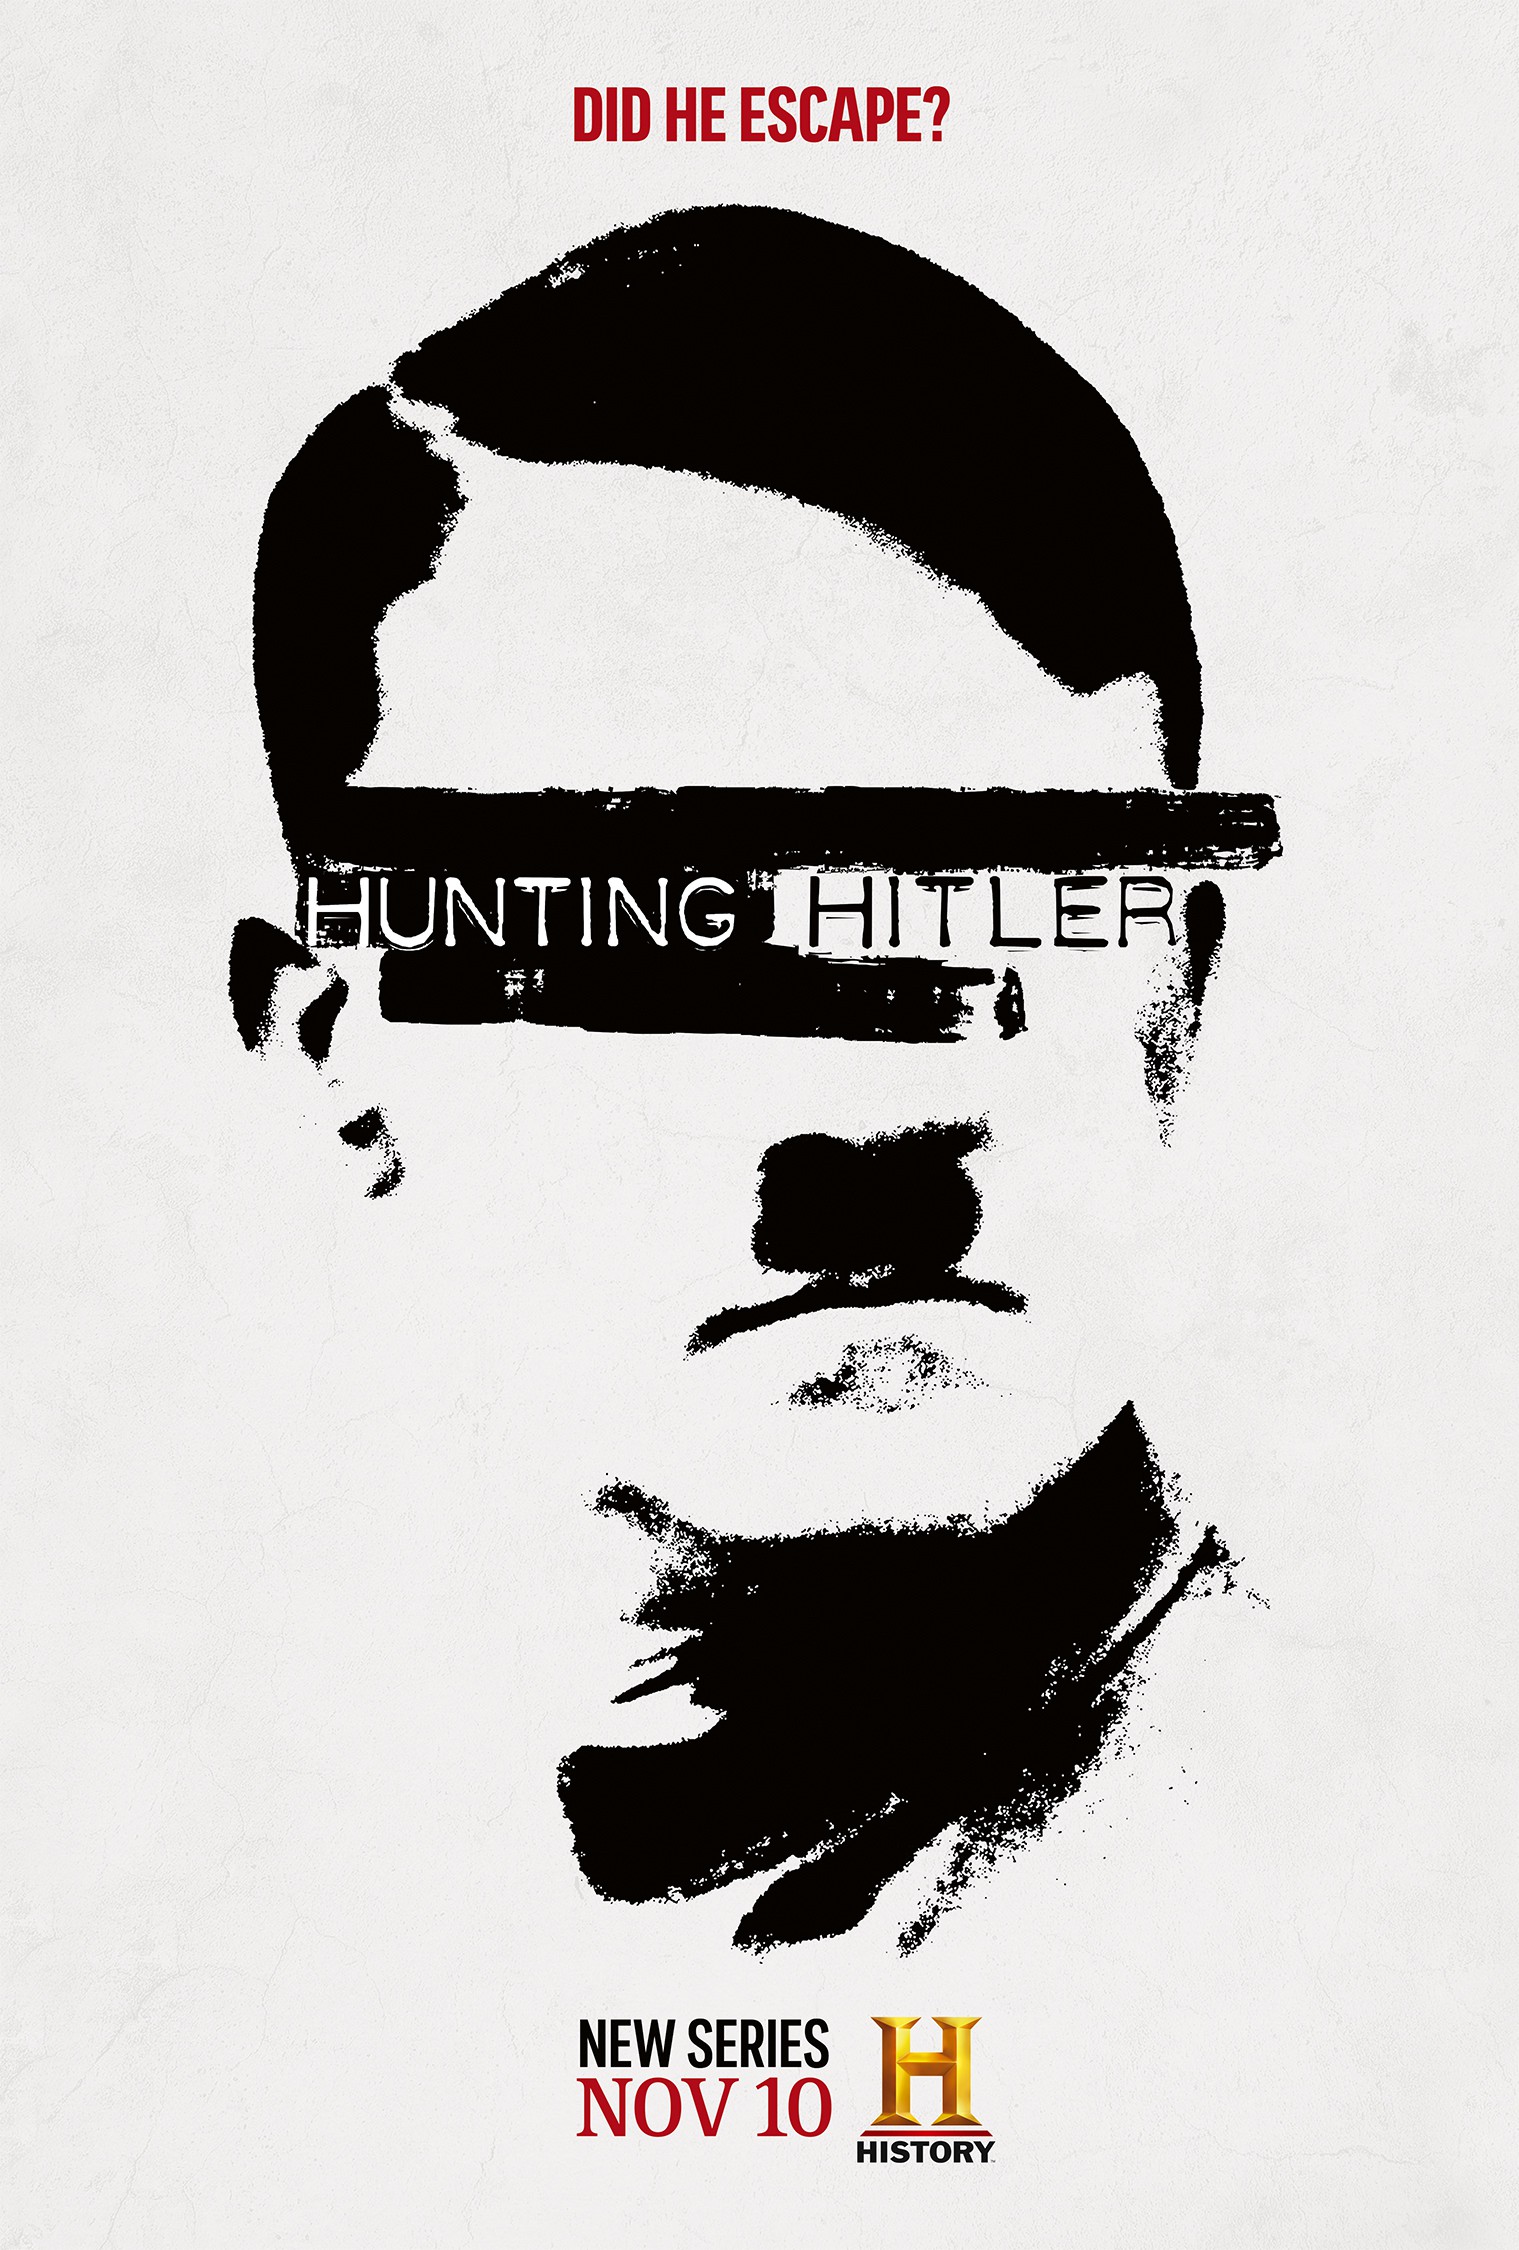 Mega Sized TV Poster Image for Hunting Hitler 